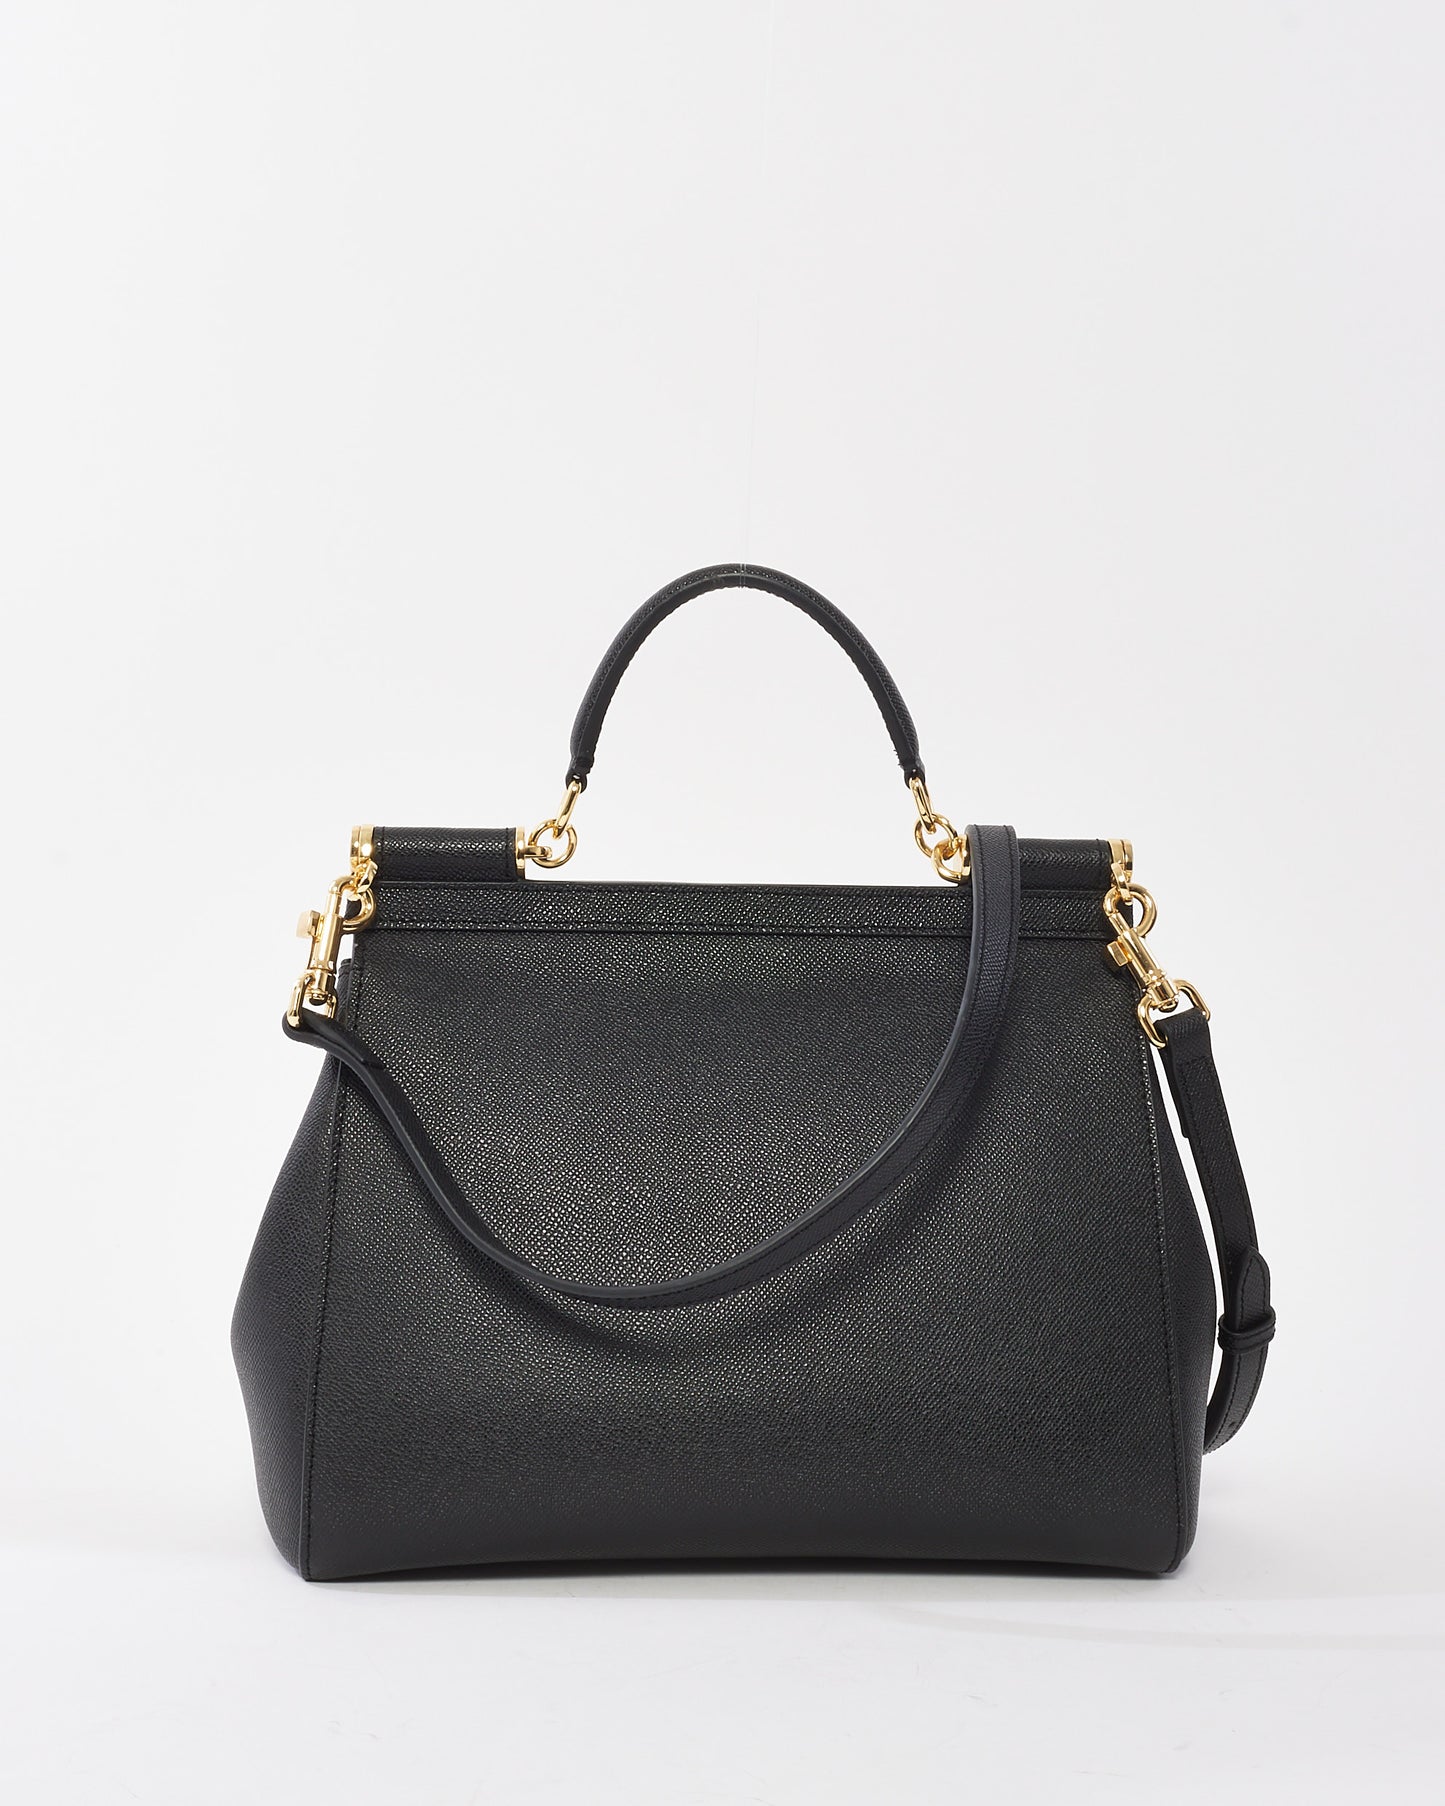 Dolce & Gabbana Black Leather Medium Miss Sicily Bag